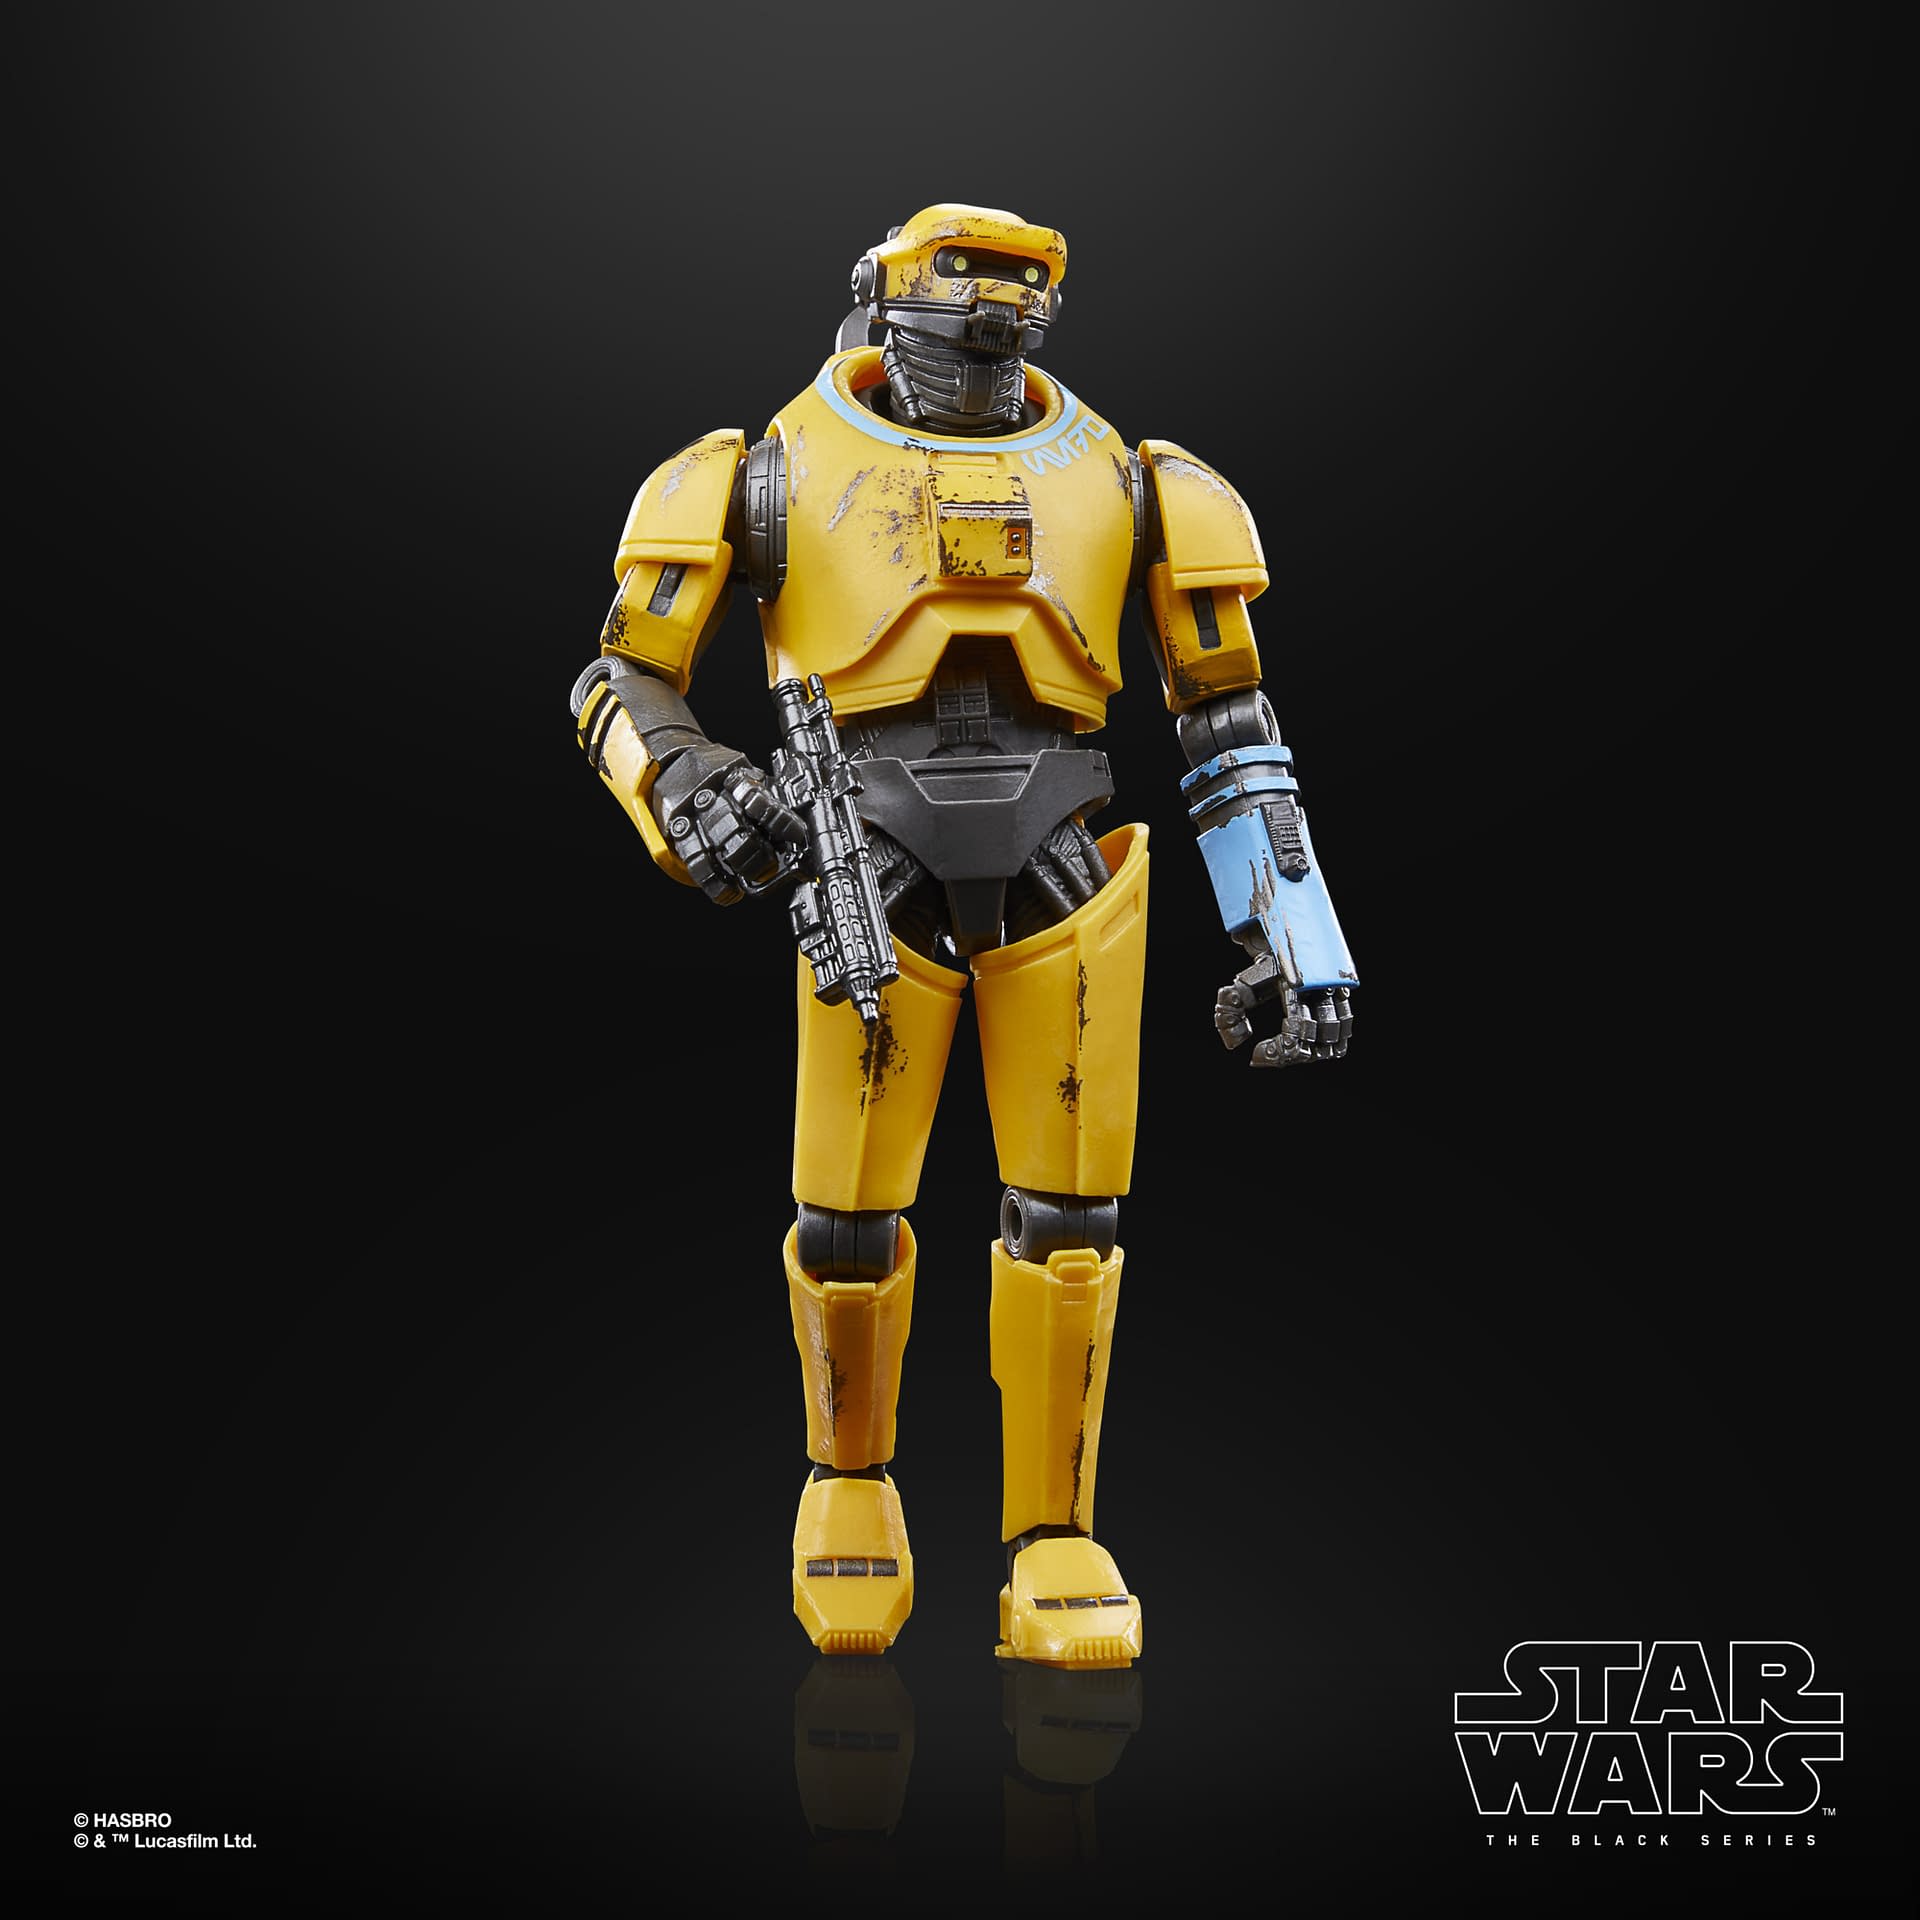 Obi-Wan Kenobi's NED-8 Comes to Hasbro with New Star Wars Figure 